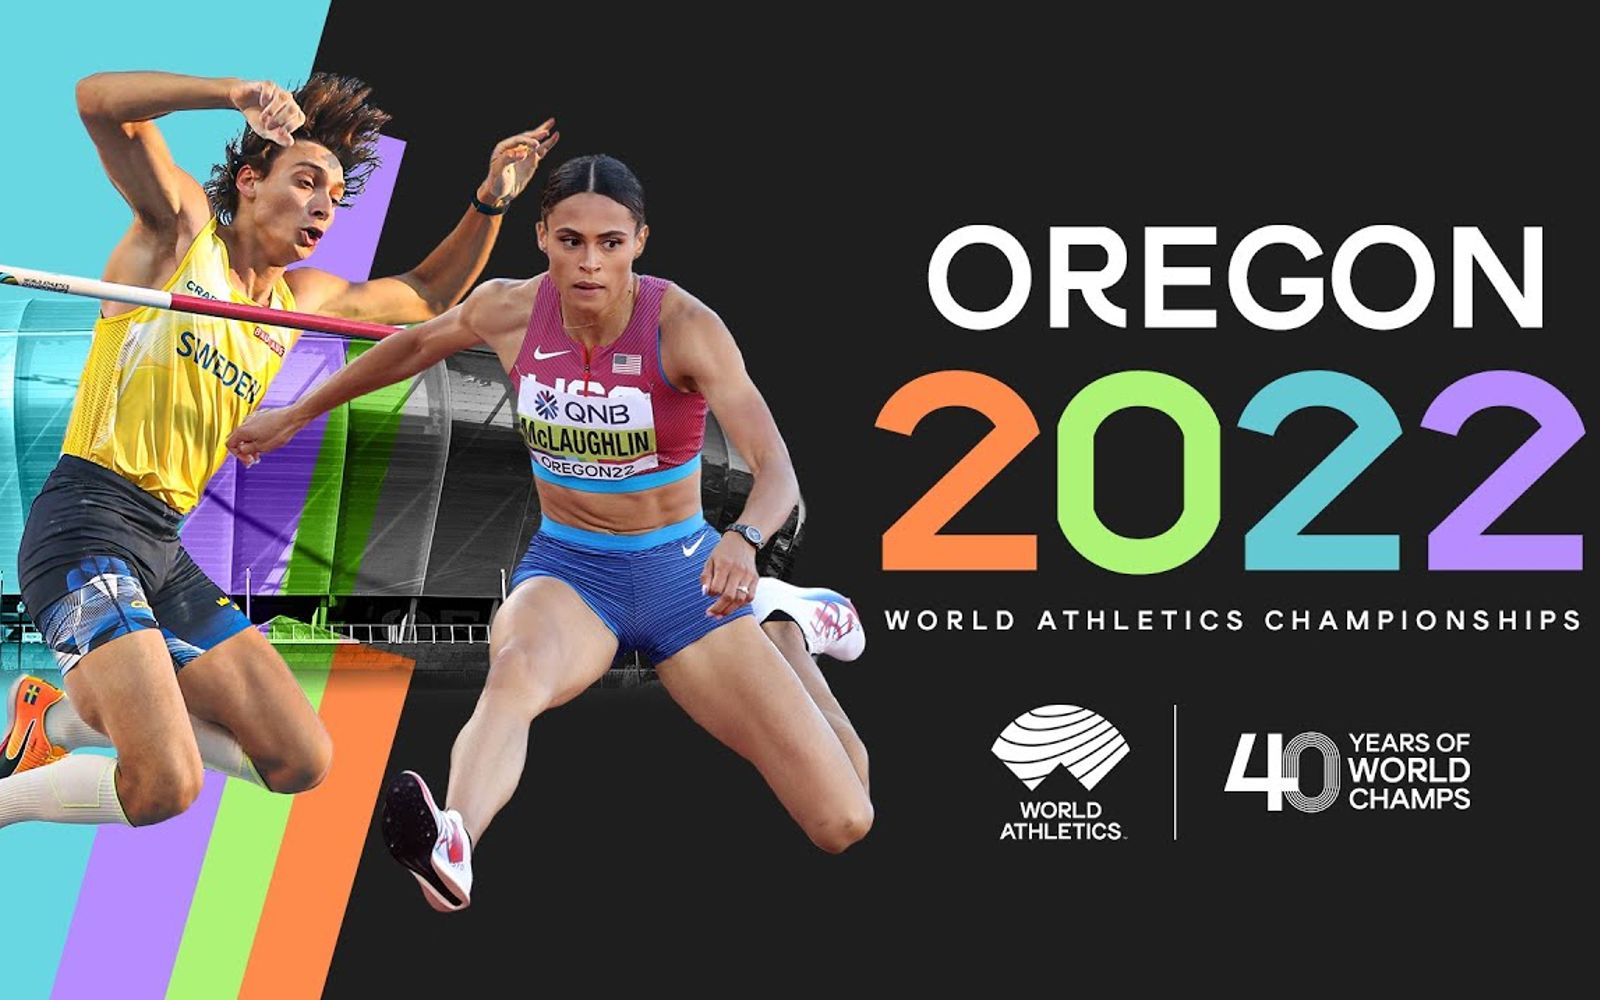 Oregon 2022 World Championships graphic